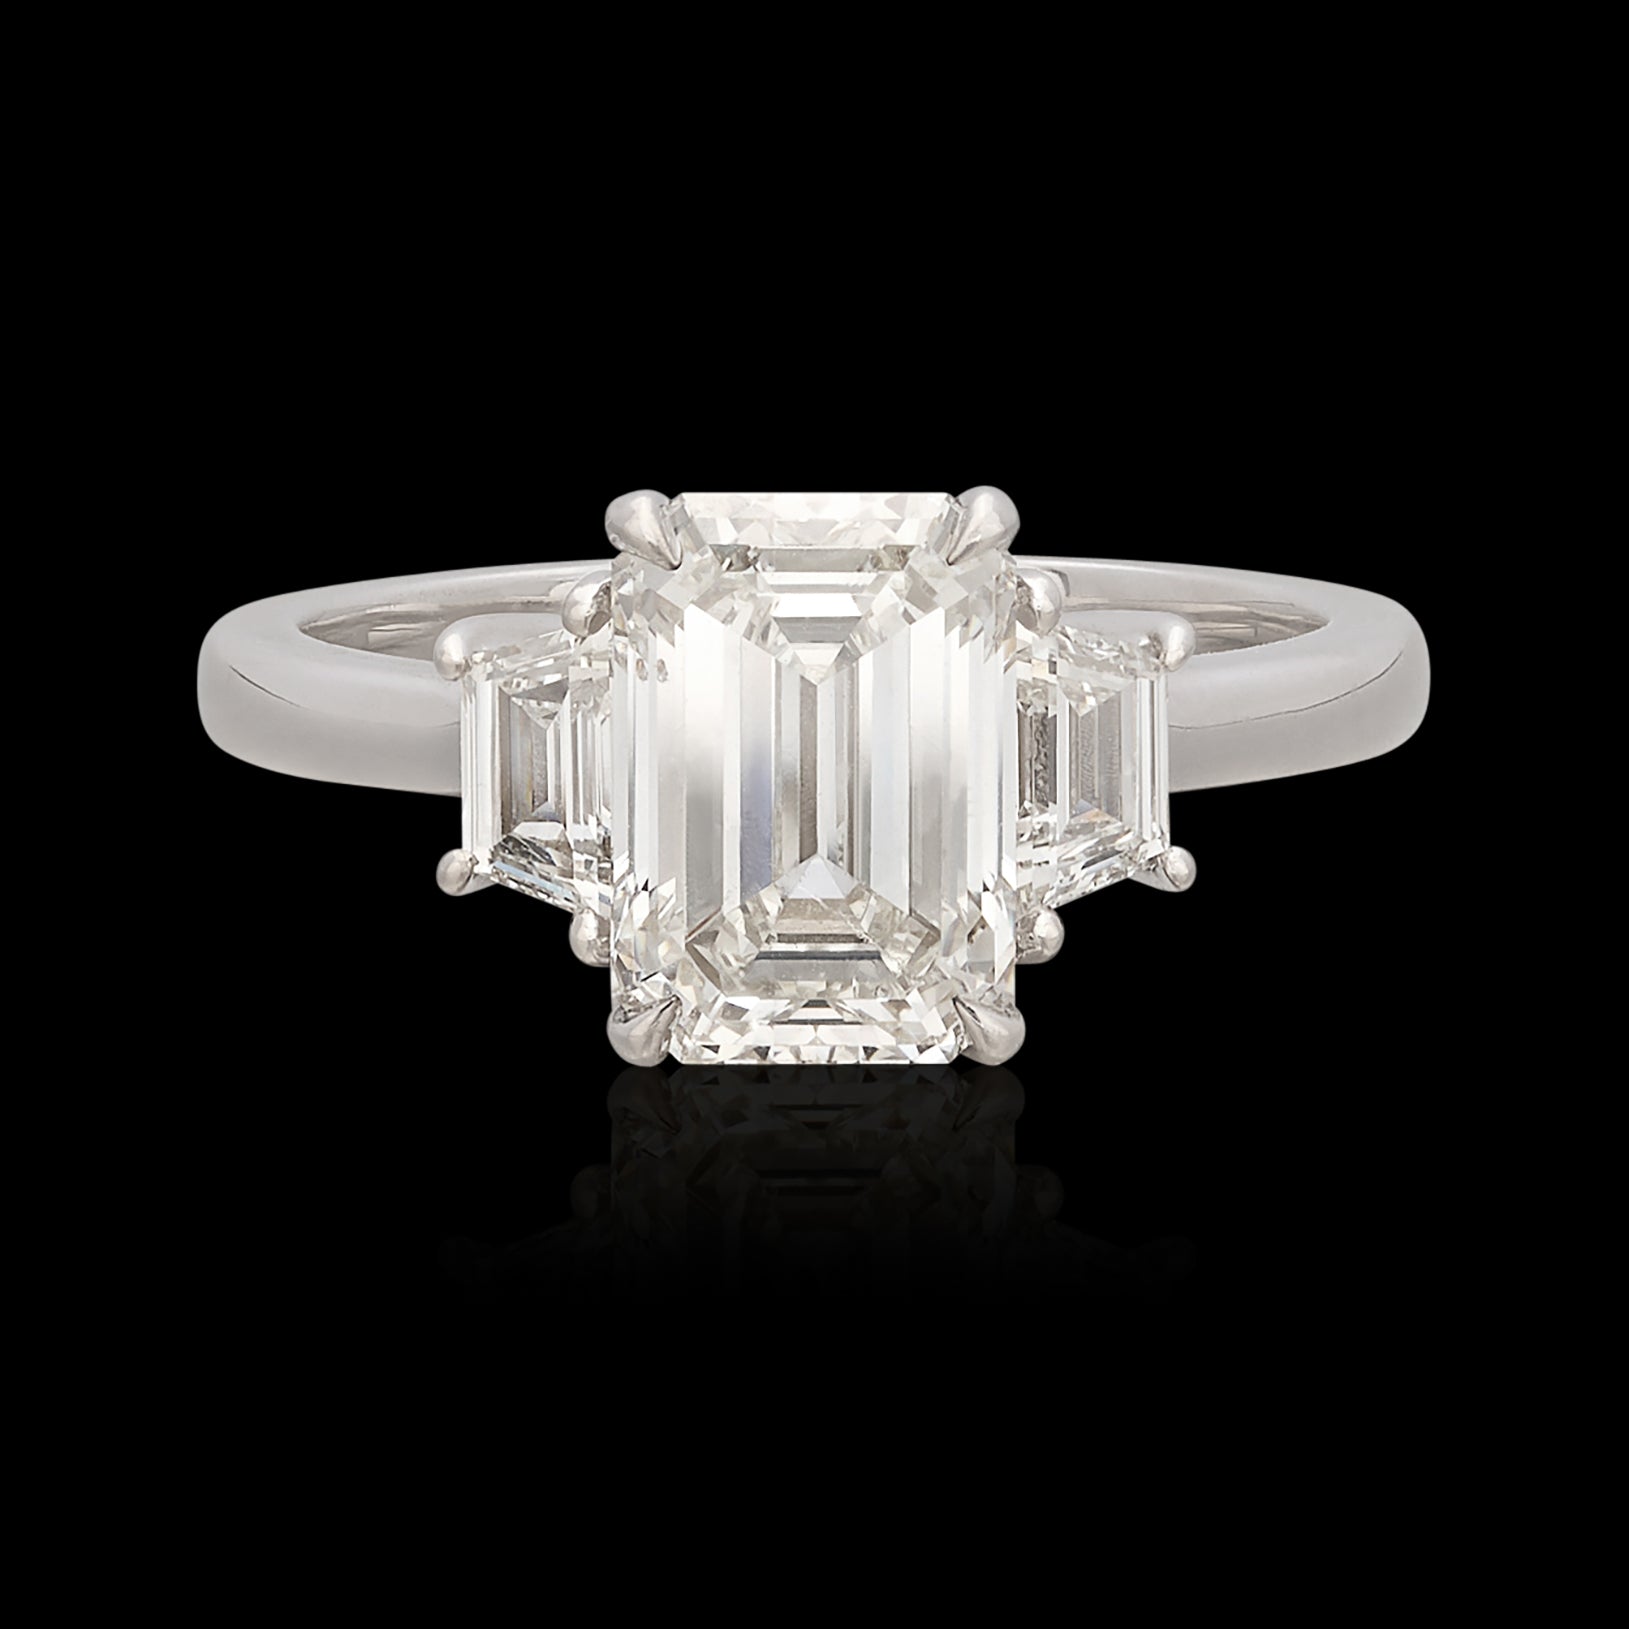 18kt Flexible Diamond Ring - Underwoods Jewelers